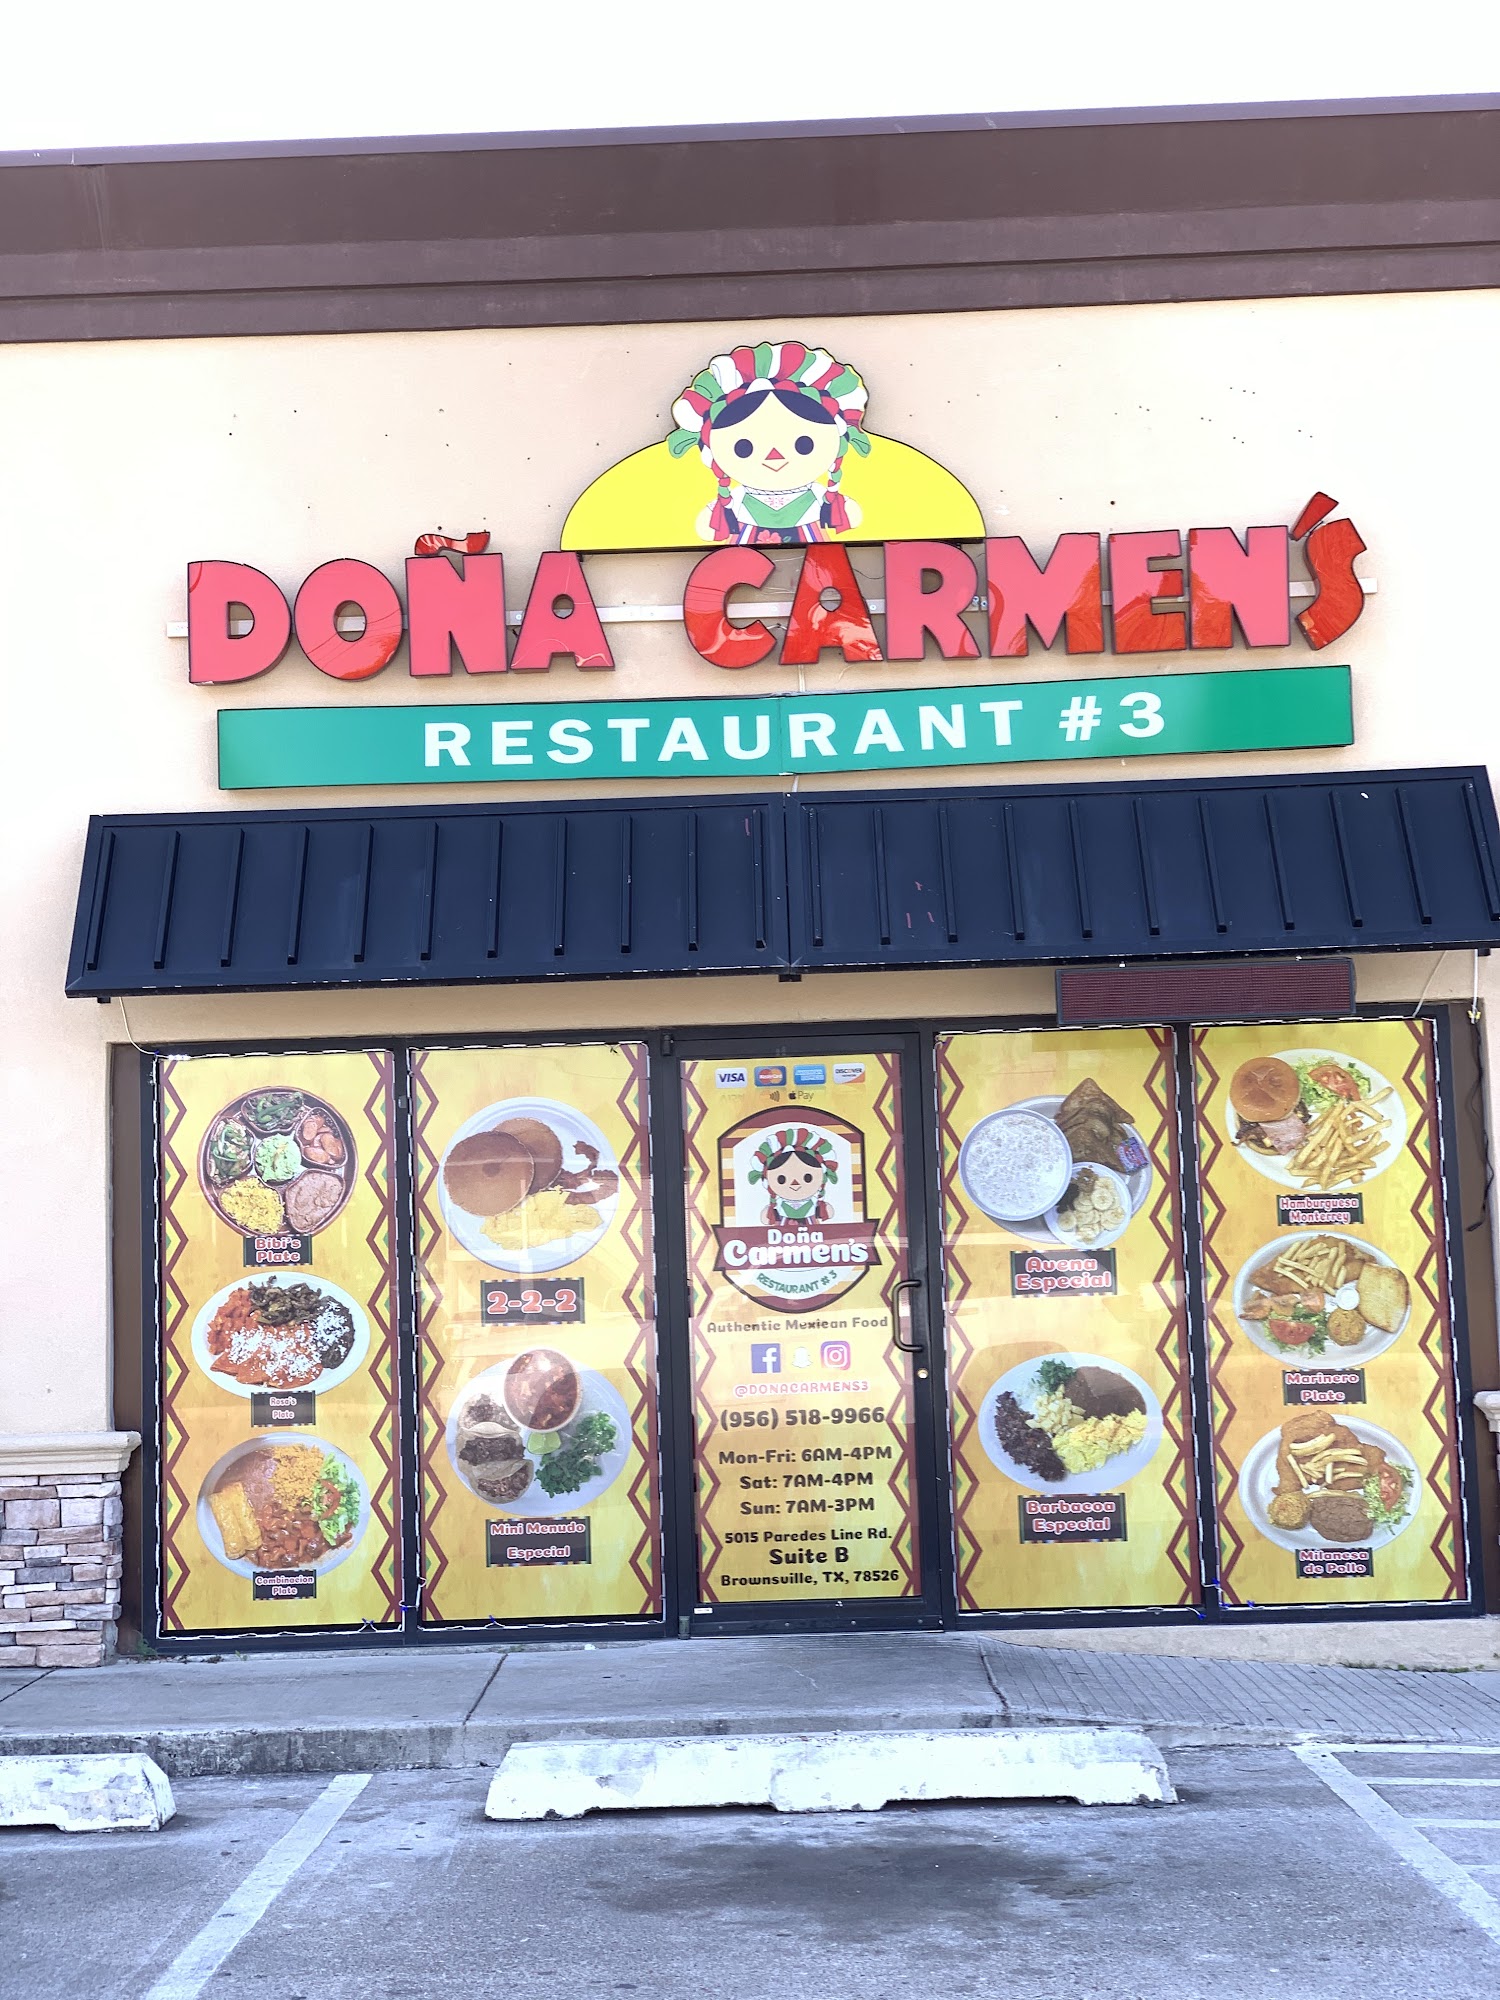 Dona Carmen's Restaurant #3